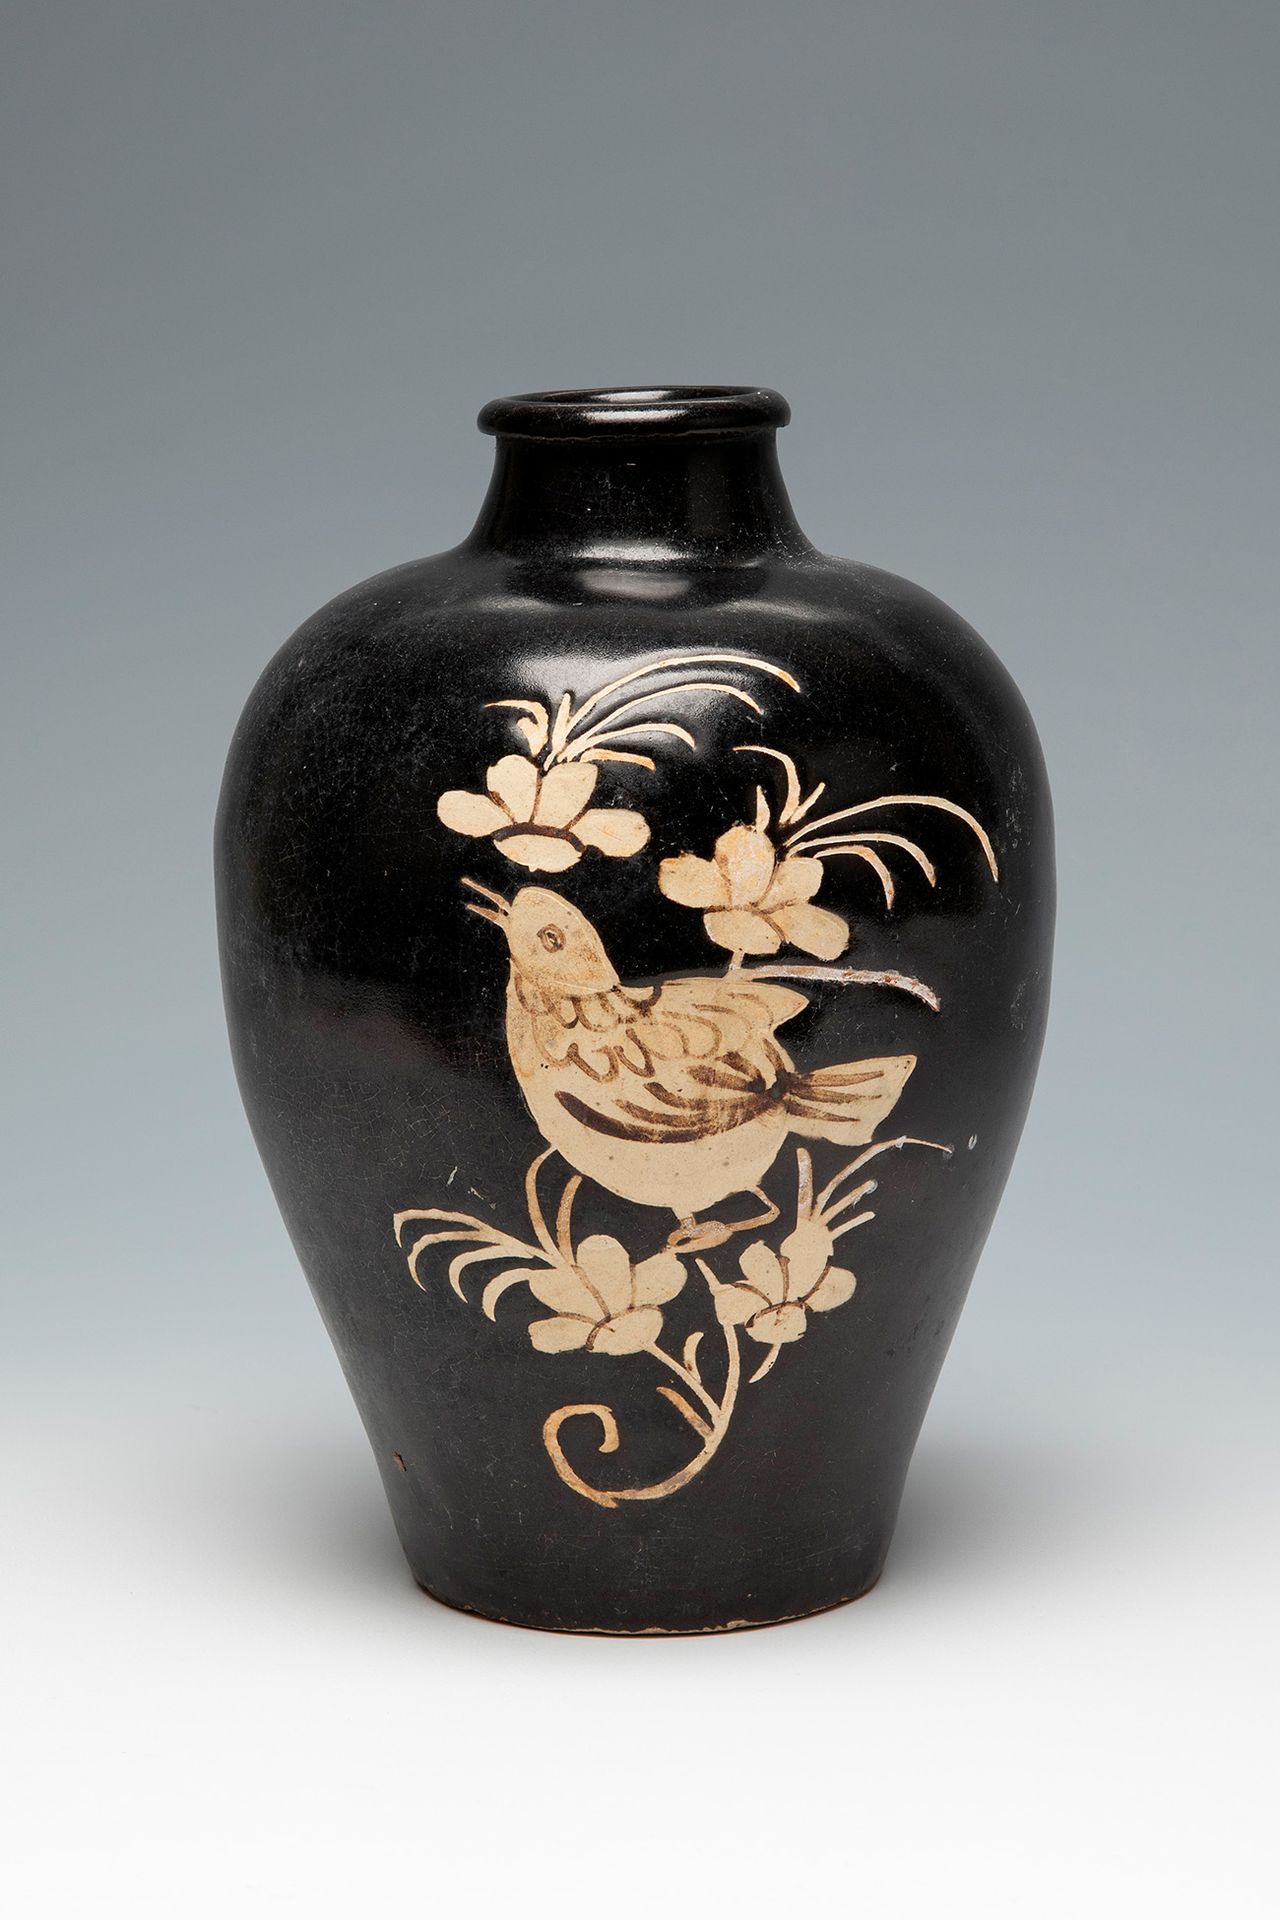 Null Chizou风格的花瓶。中国，20世纪。
在石器中。
尺寸。22 x 15厘米。
花瓶有一个圆形的底座，椭圆形的腹部趋向于球体，向肩部更宽。颈部是短而&hellip;